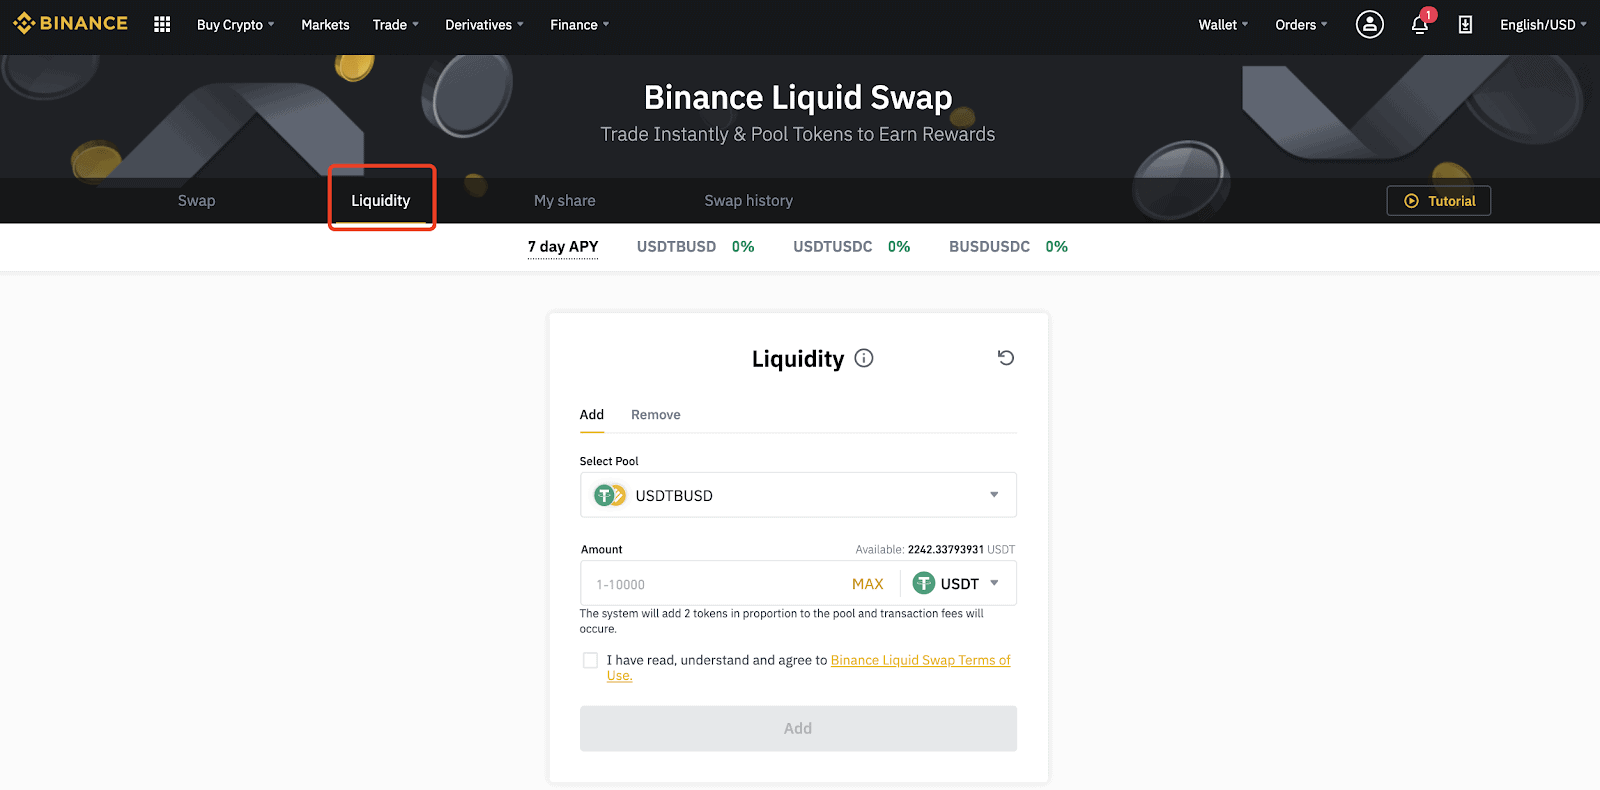 Binance Liquid Swap là gì?